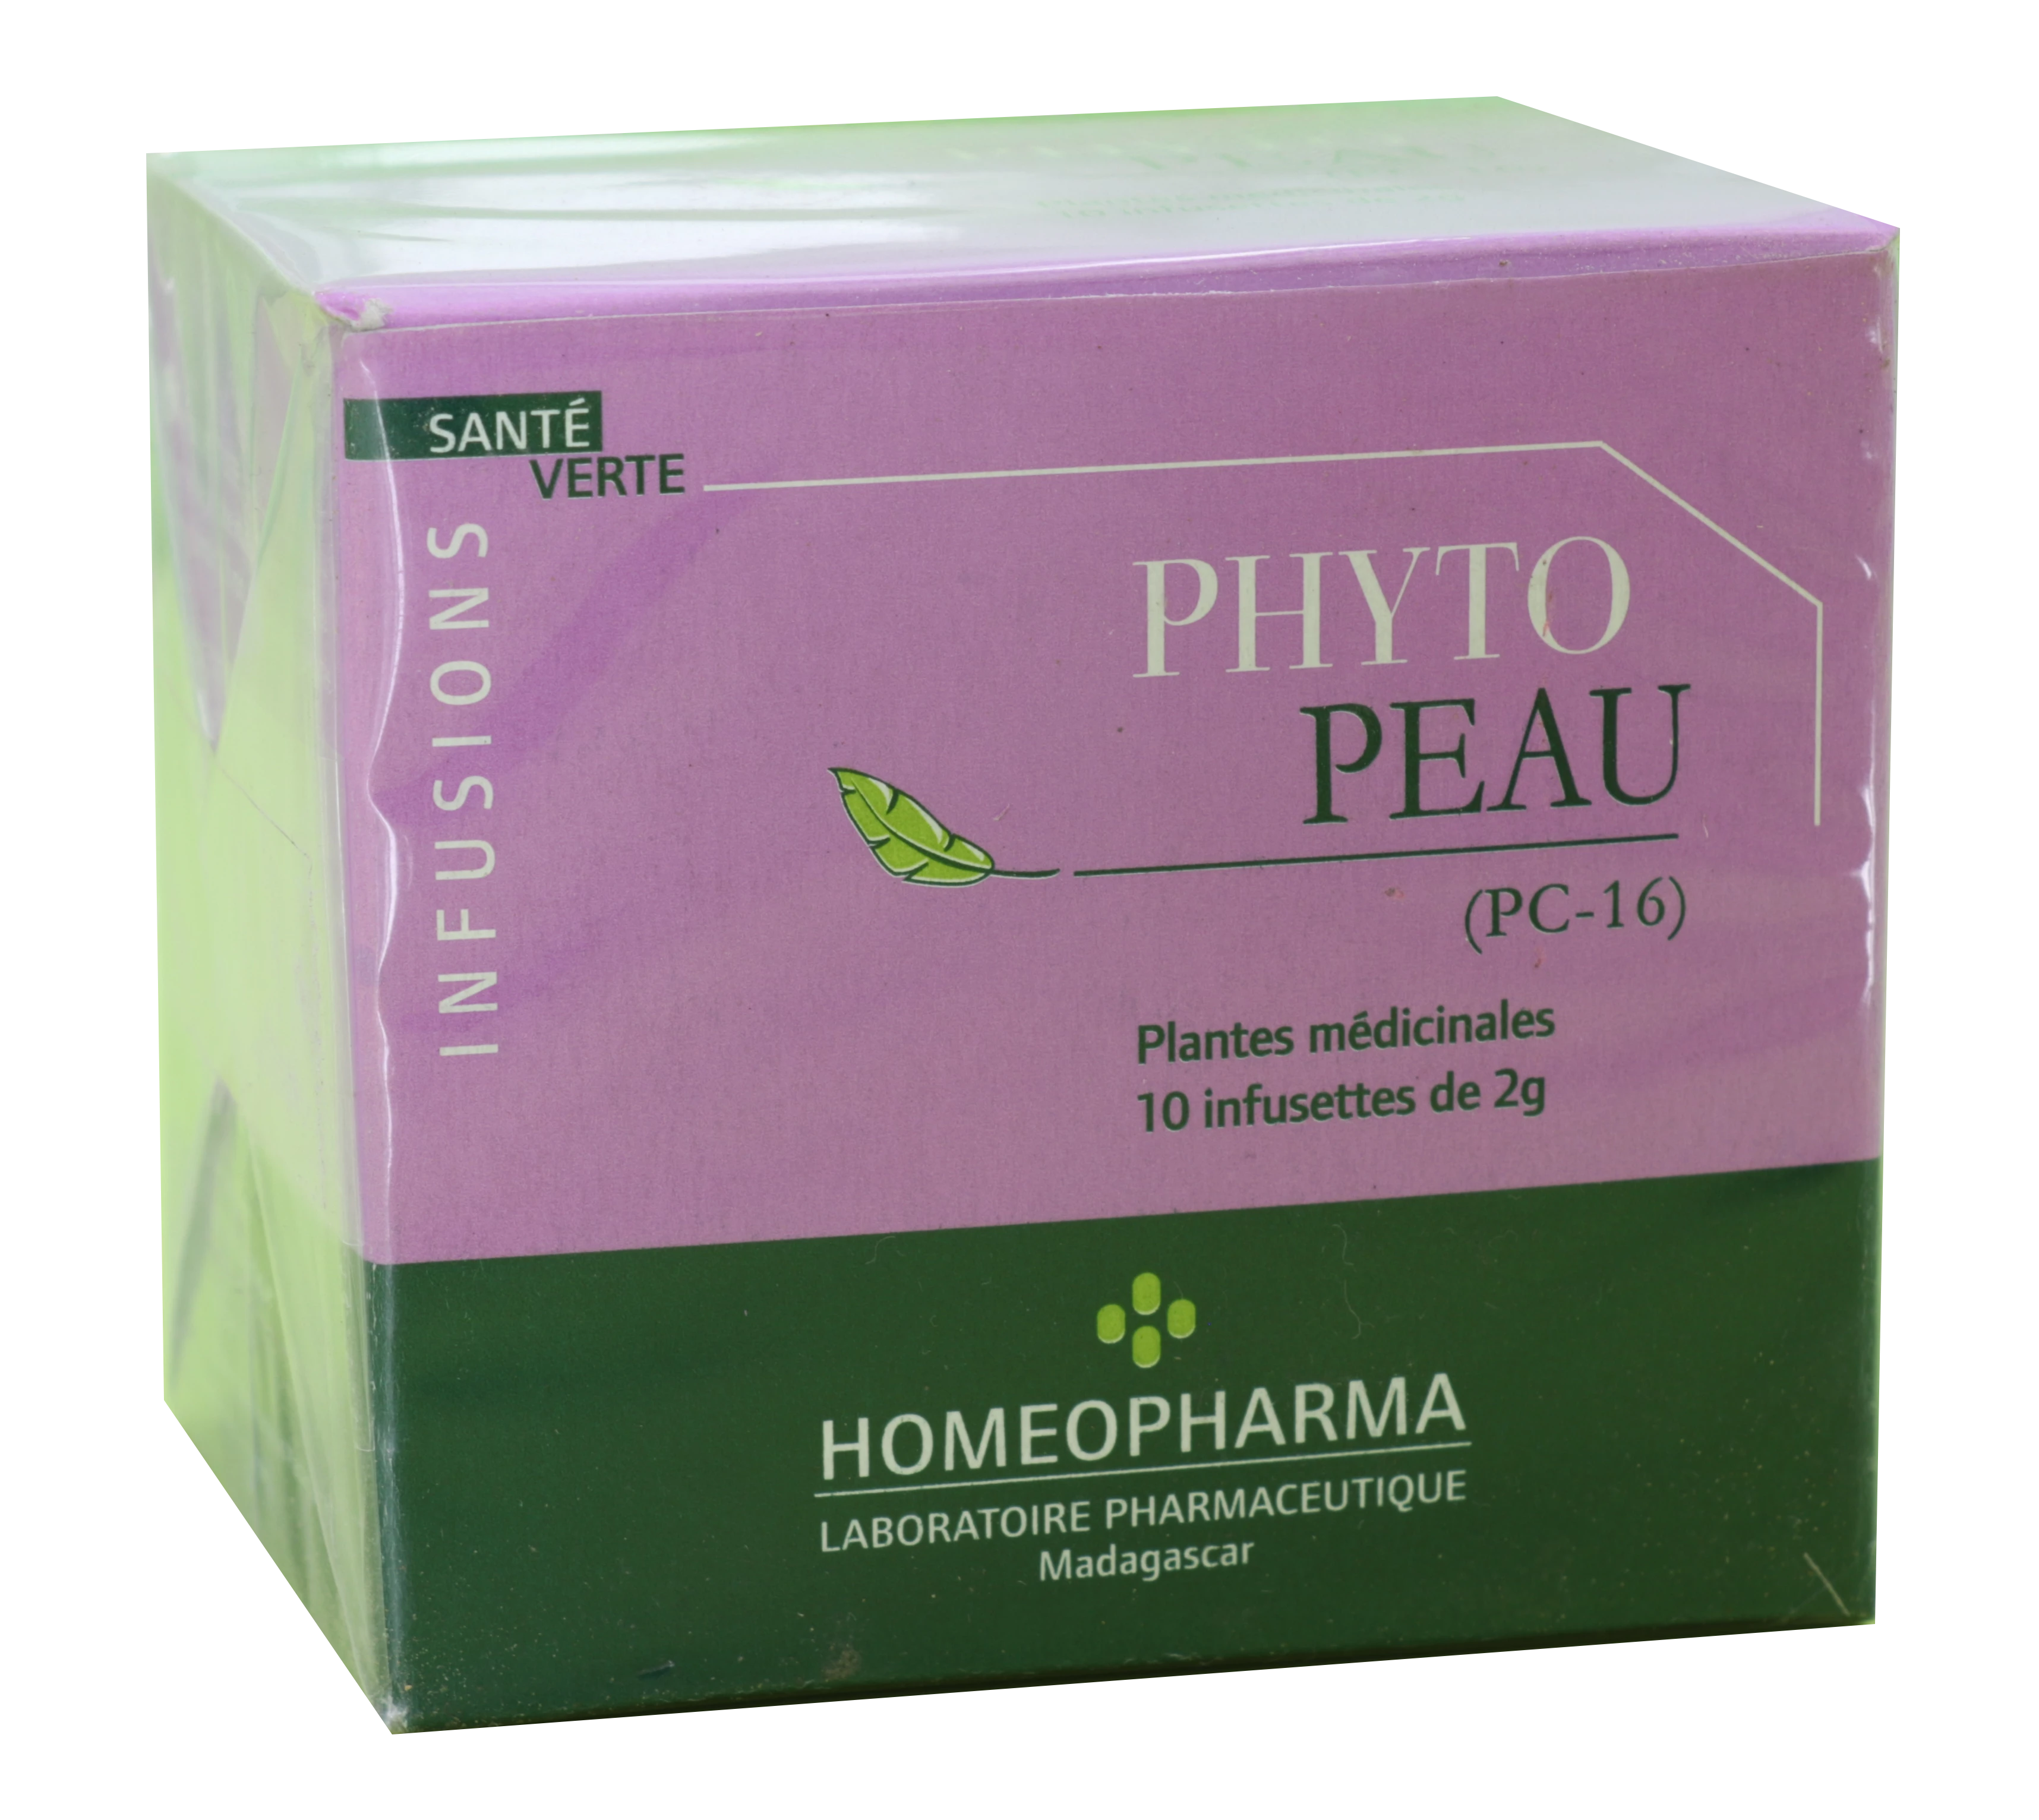 Phytotherapie Tradicional Pc16-phyto-peau Caja 20 Infusiones - HOMEOPHARMA